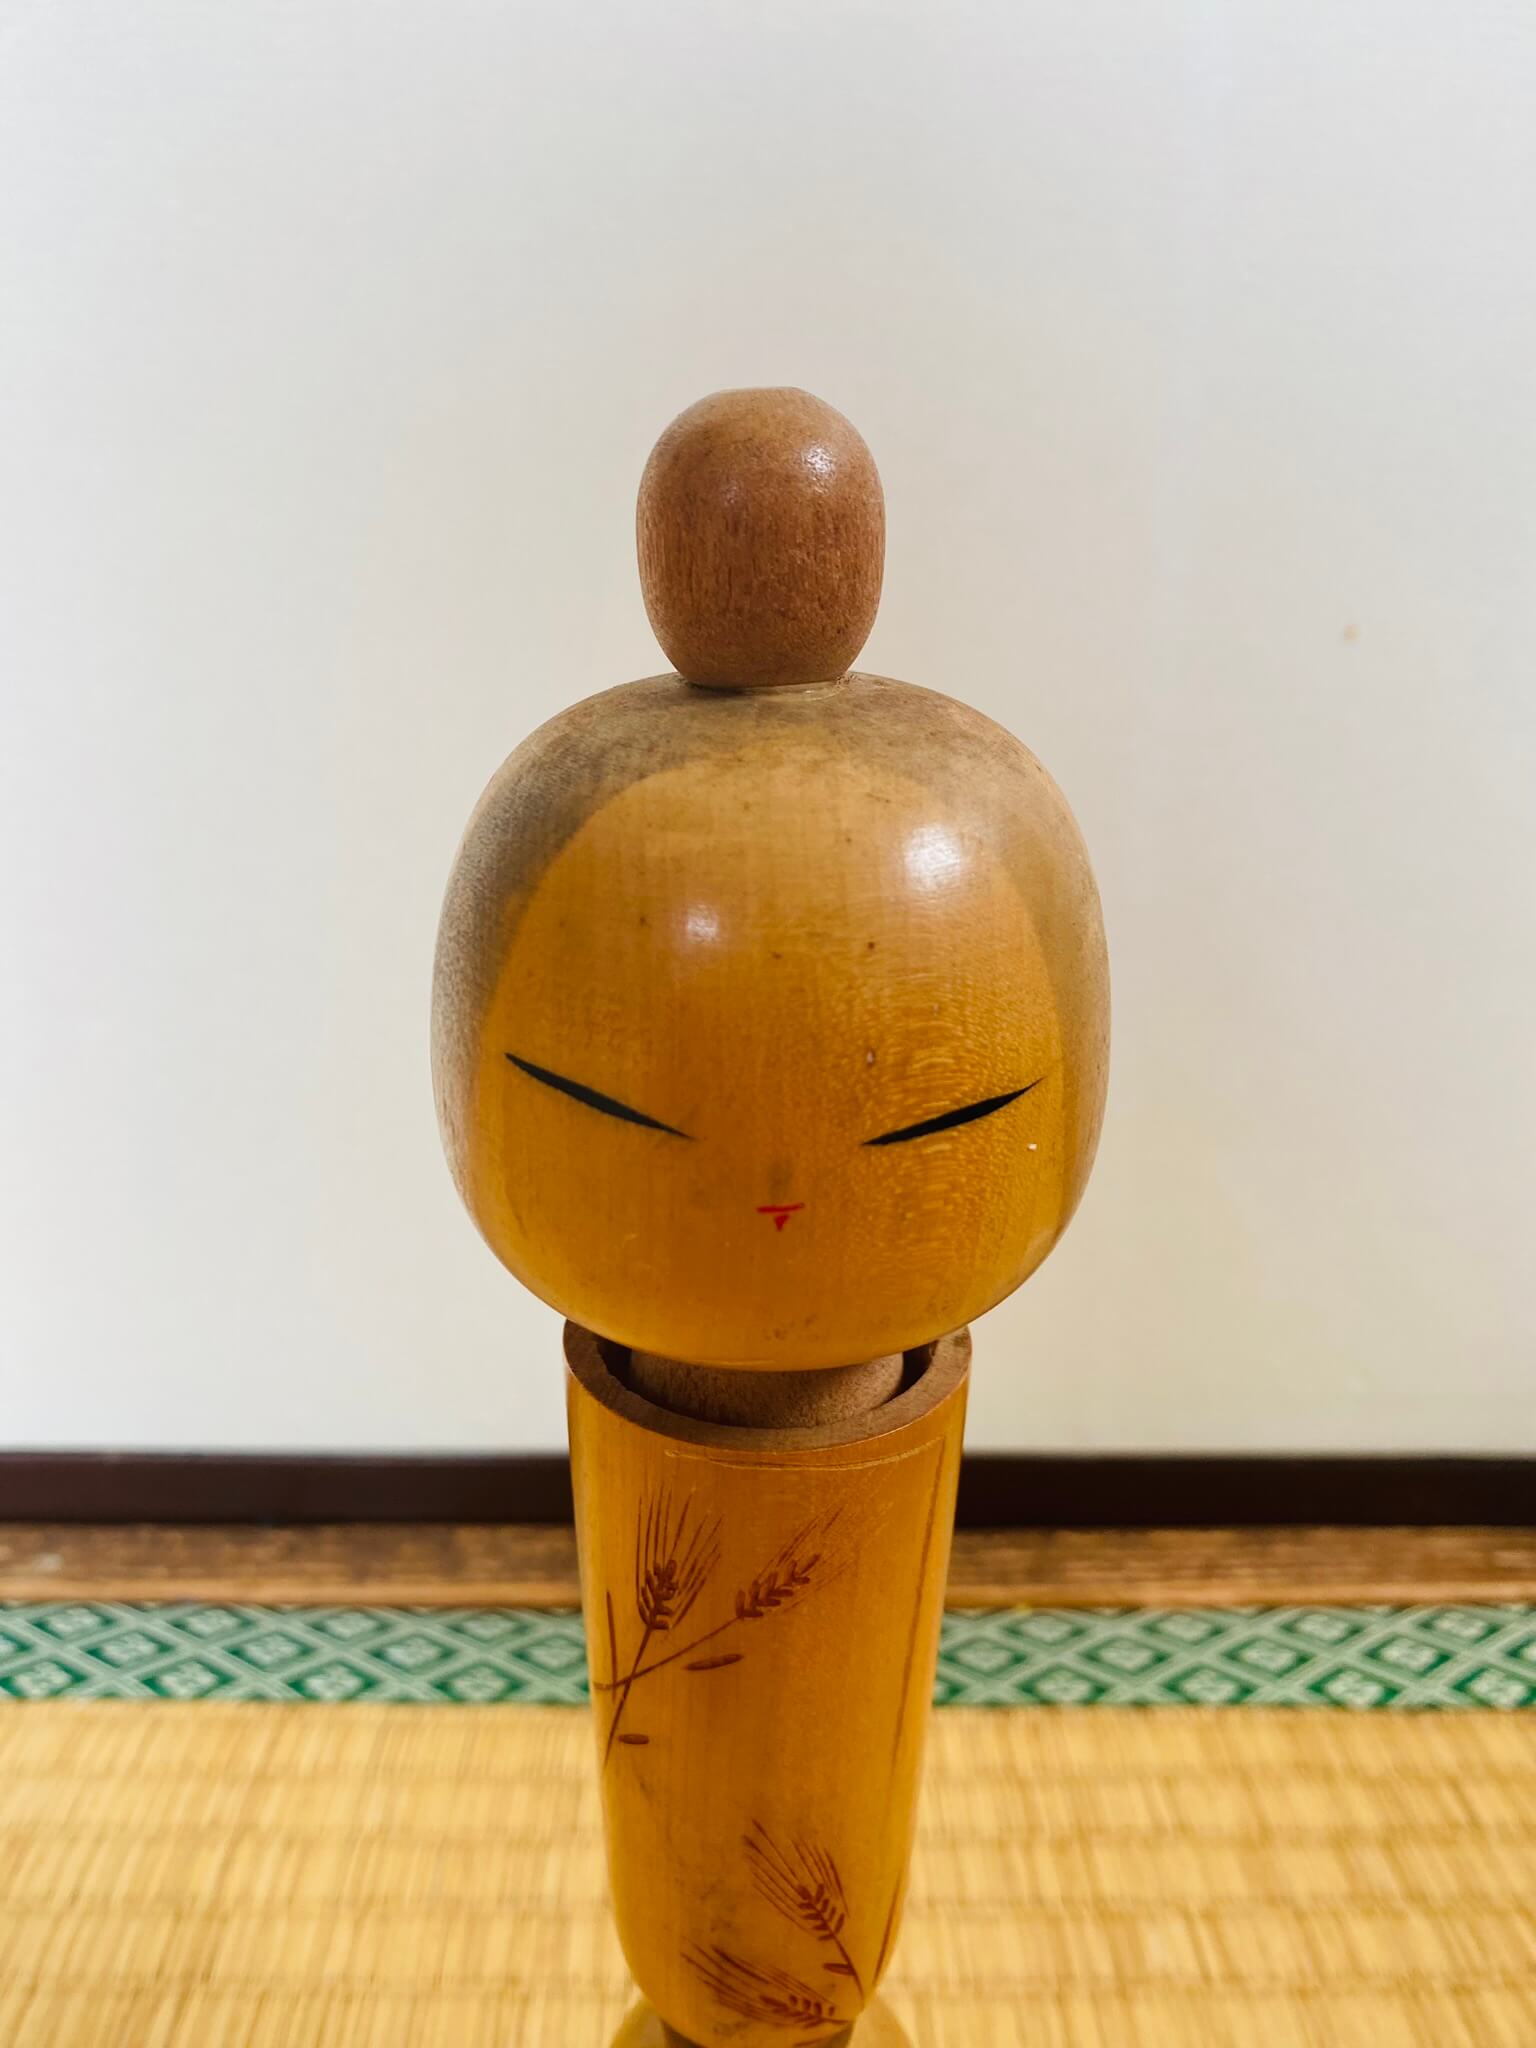 Vintage Creative Kokeshi By Award-Winning Kishi Sadao (1932-1998) | Titled 'Seishin No Komugi' - Spirit of the Wheat'